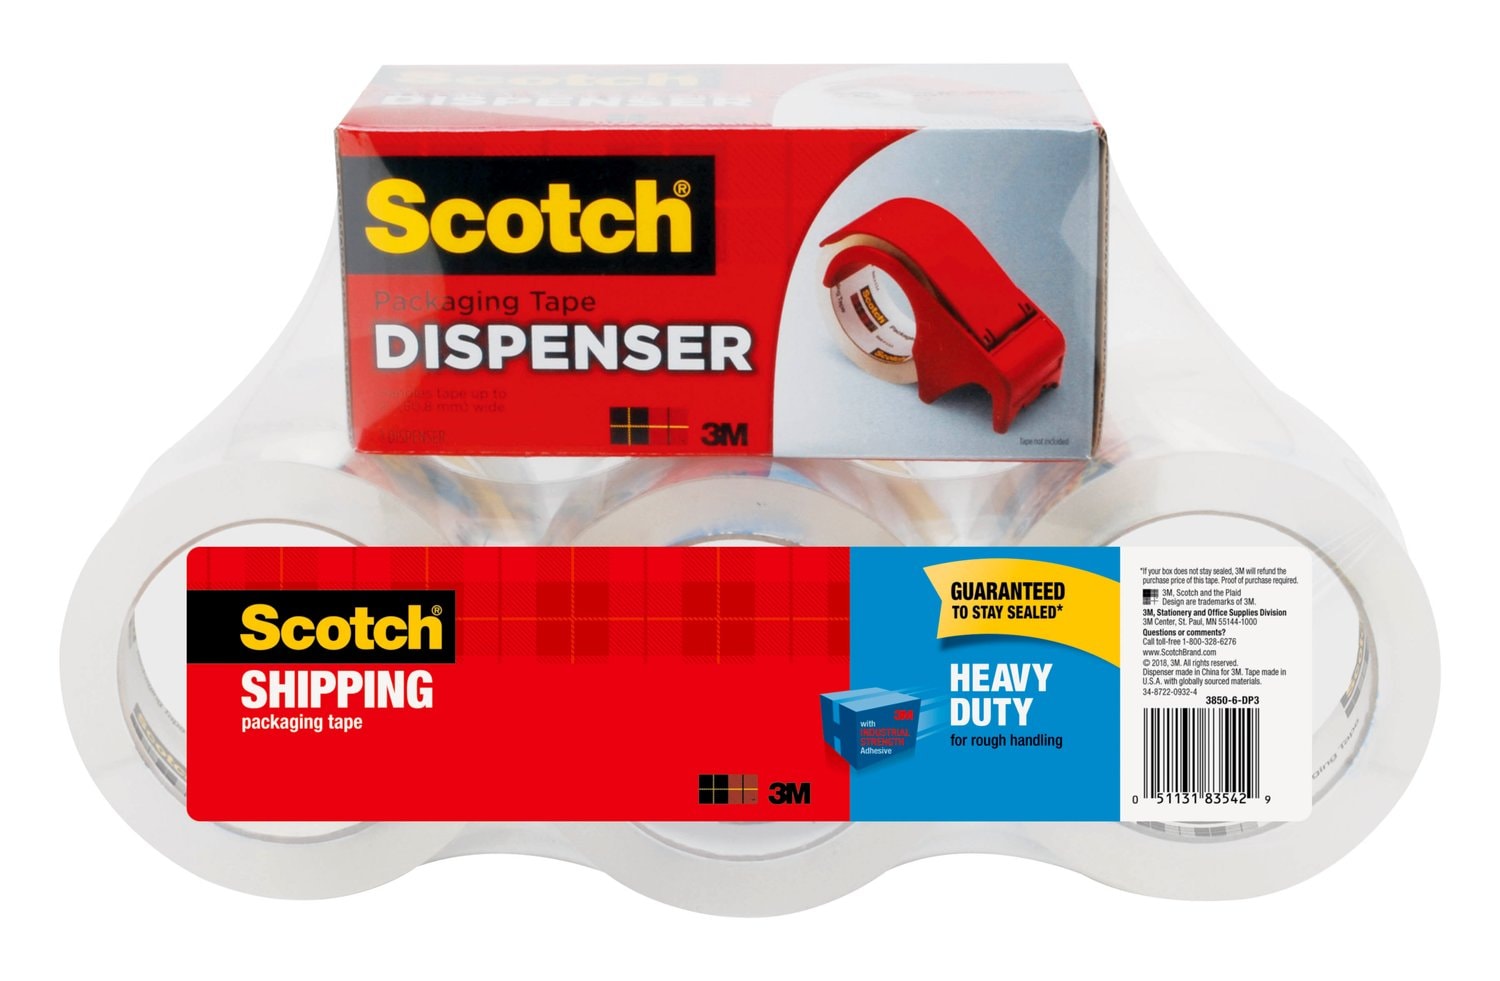 7100159392 - Scotch Heavy Duty Shipping Packaging Tape, 3850-6-DP3, 1.88 in x 54.6
yd (48 mm x 50 m), 6 rolls of 3850 plus 1 DP-300 dispenser